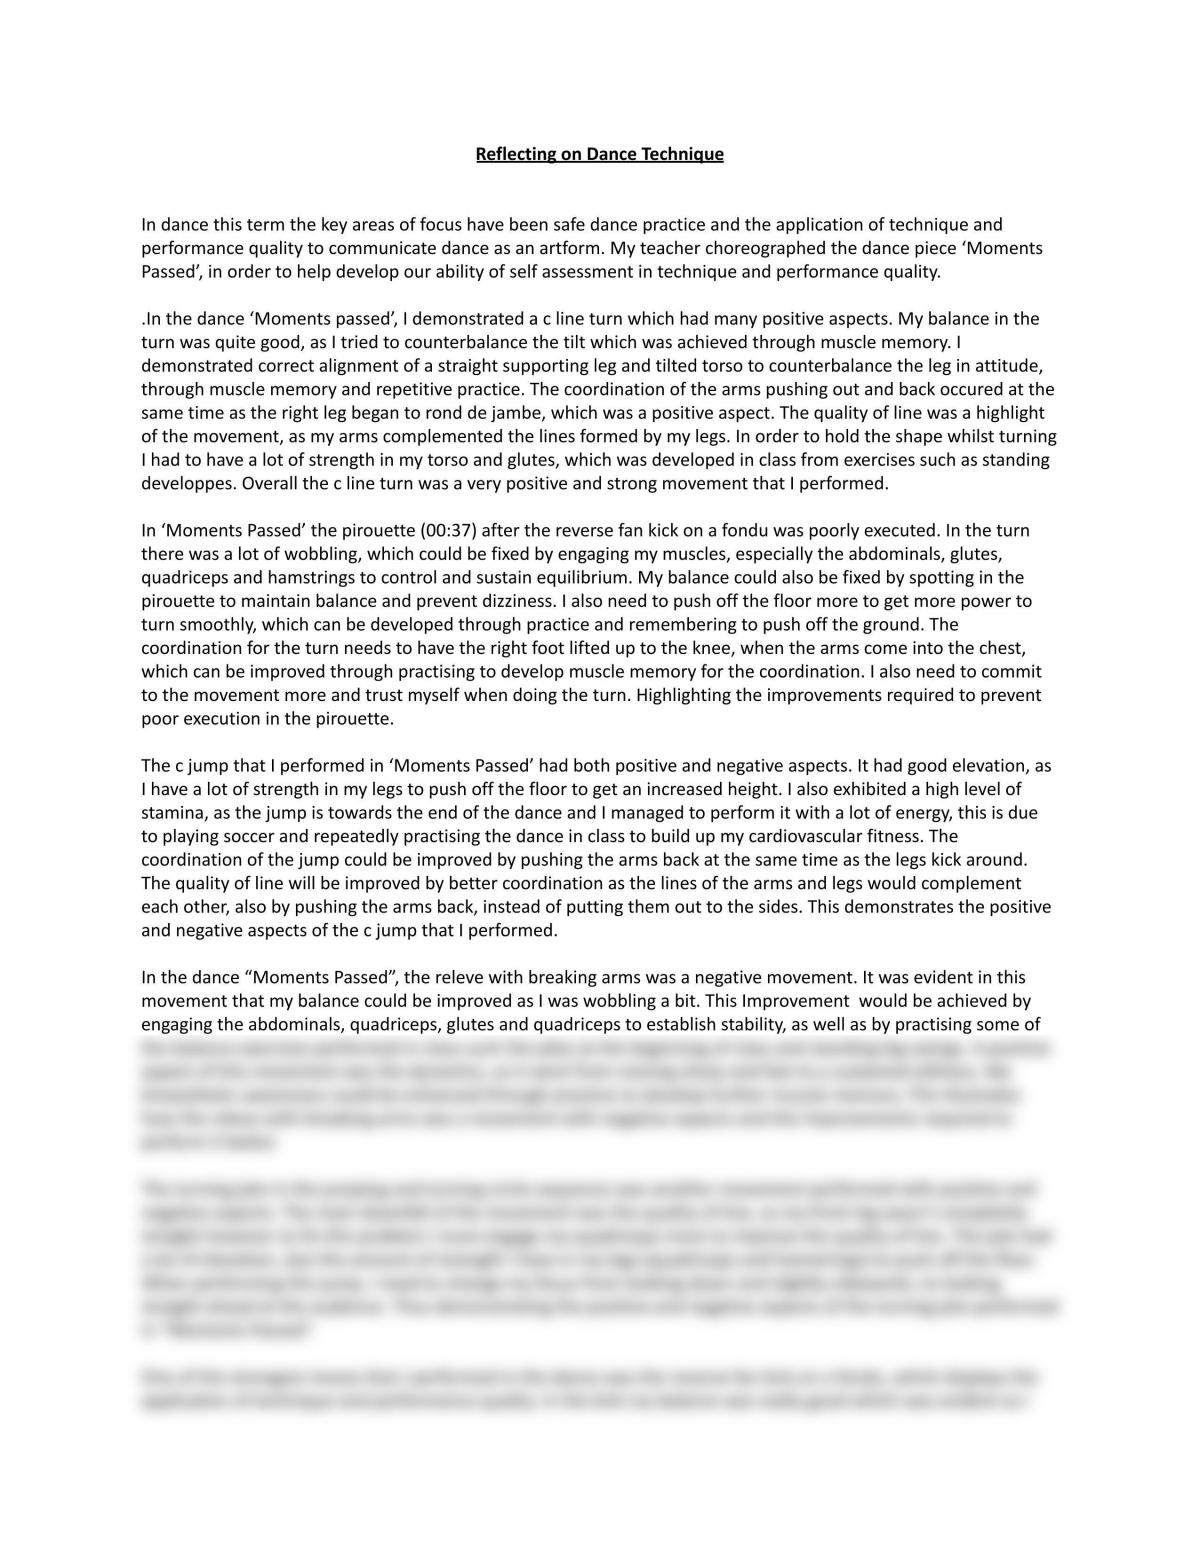 HSC Core Performance Essay - Page 1